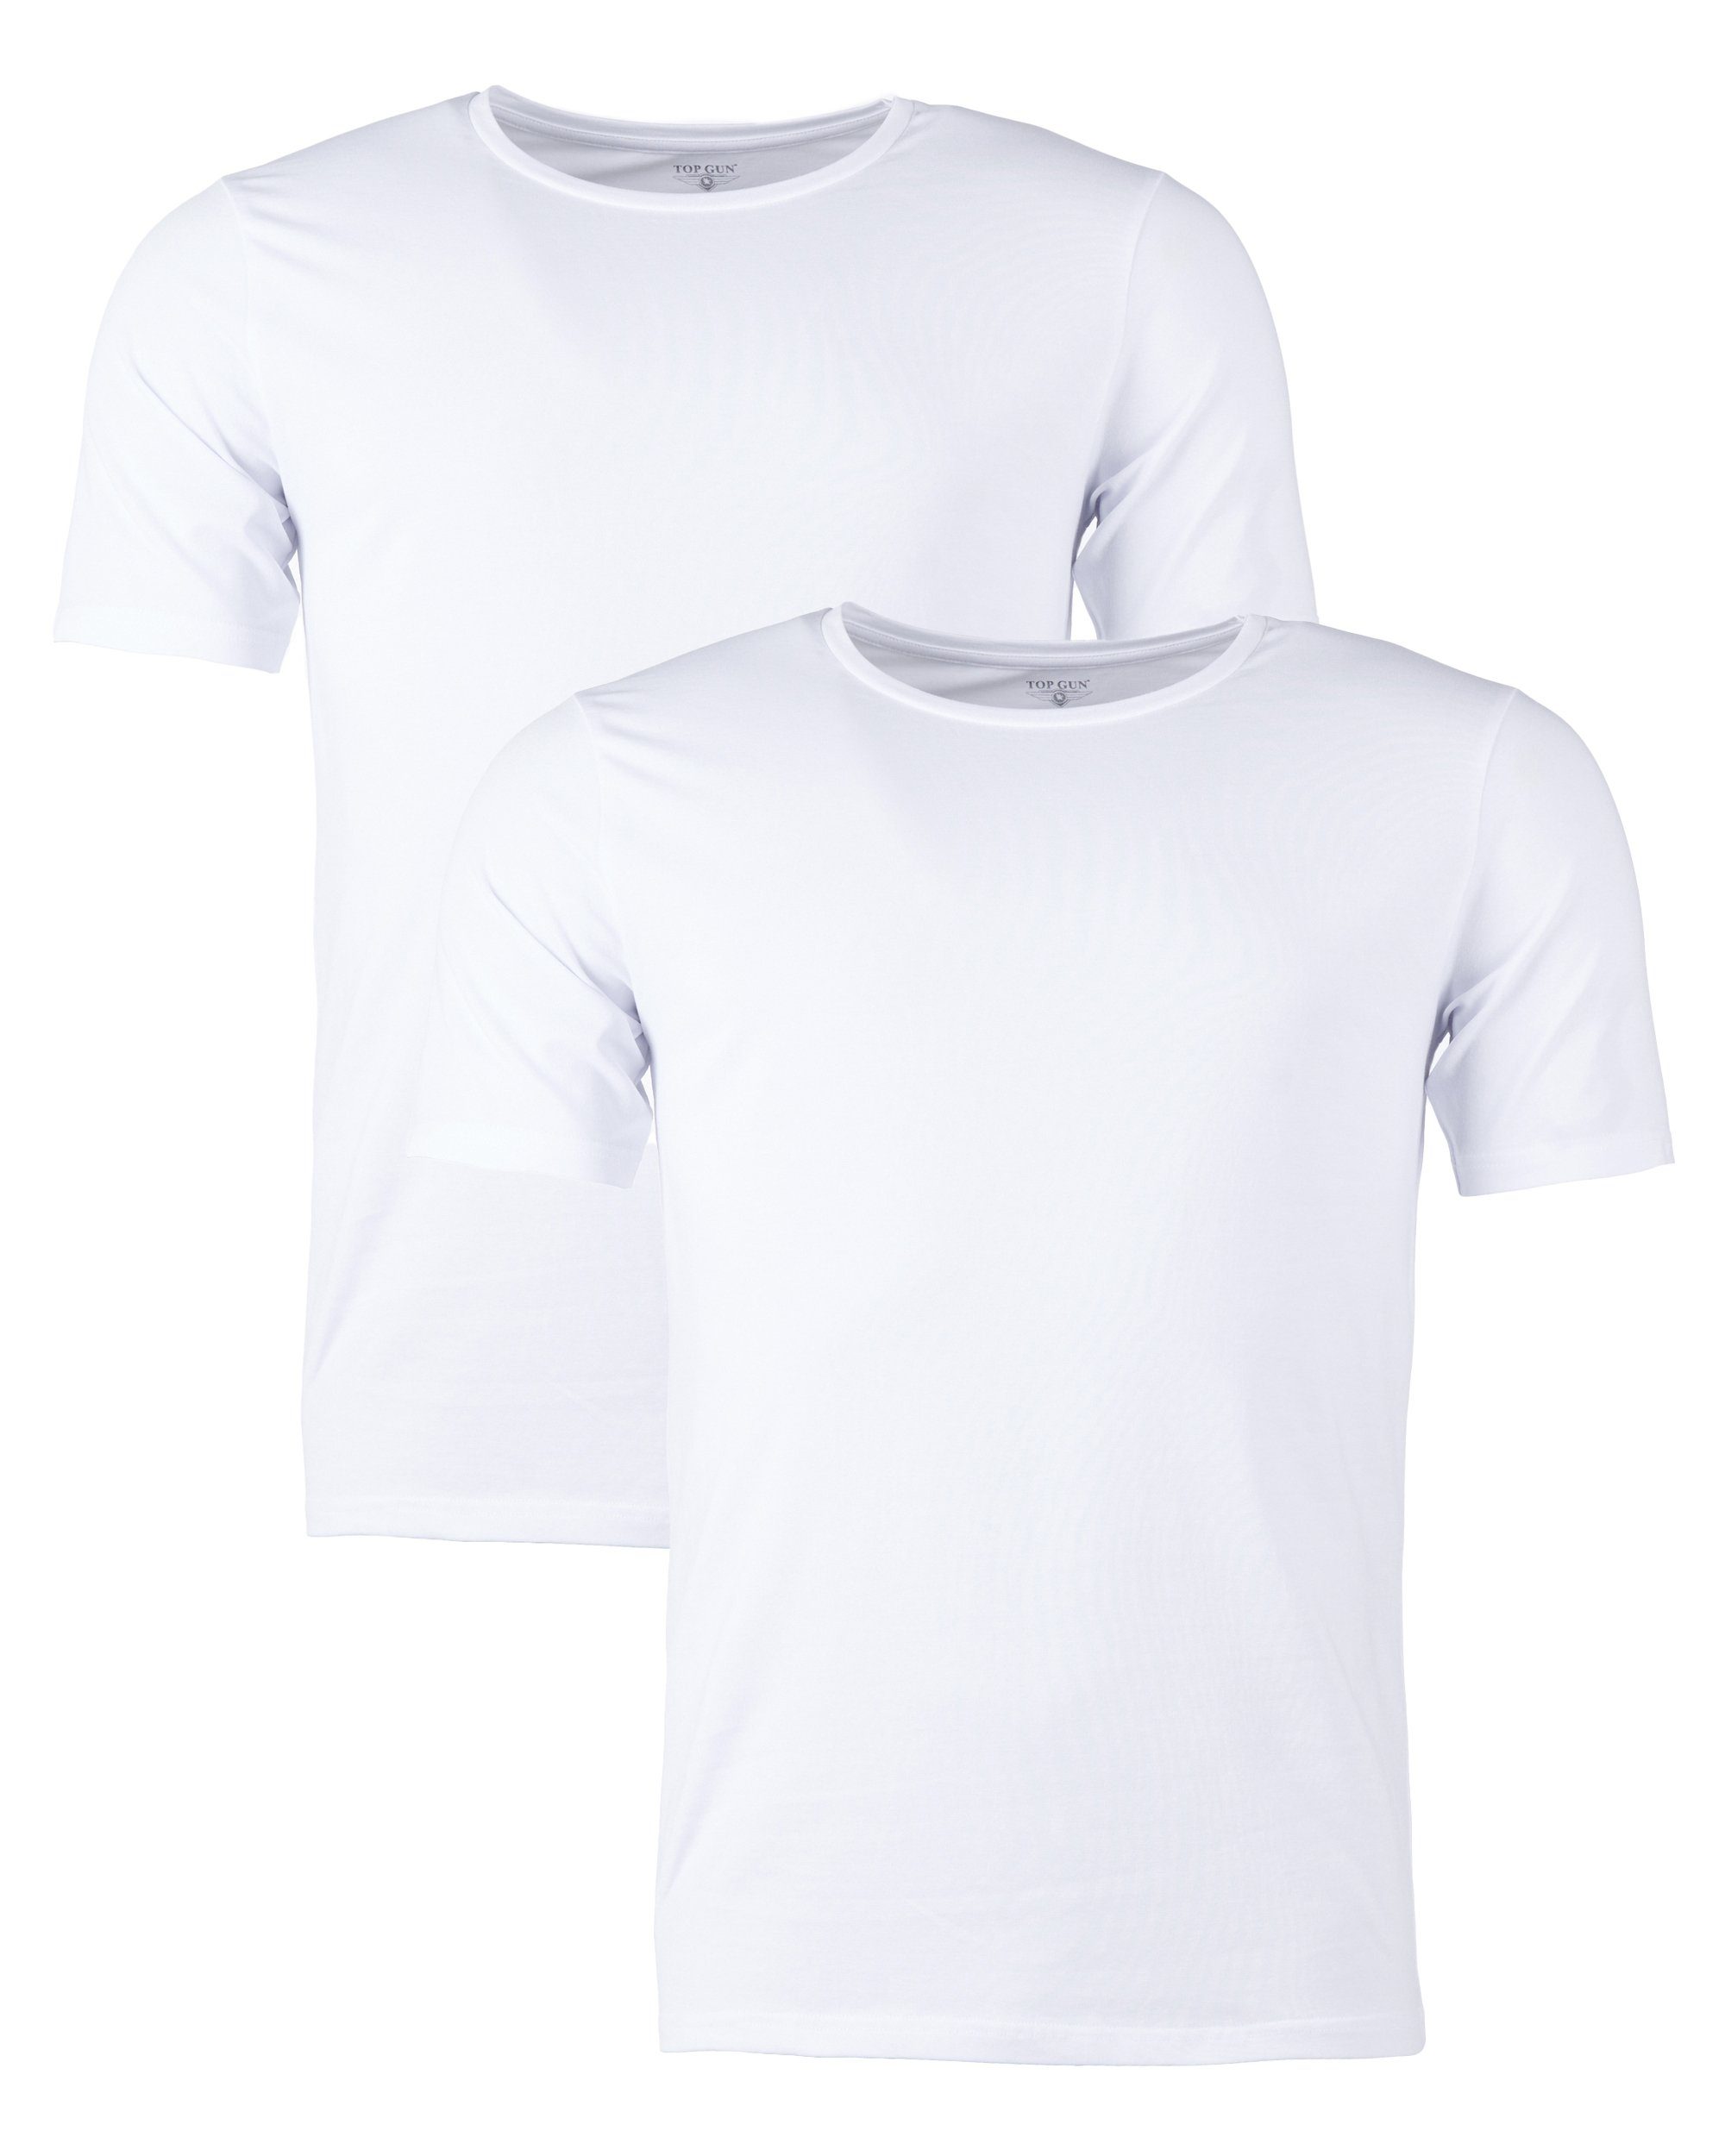 TOP GUN white TGUW003 T-Shirt